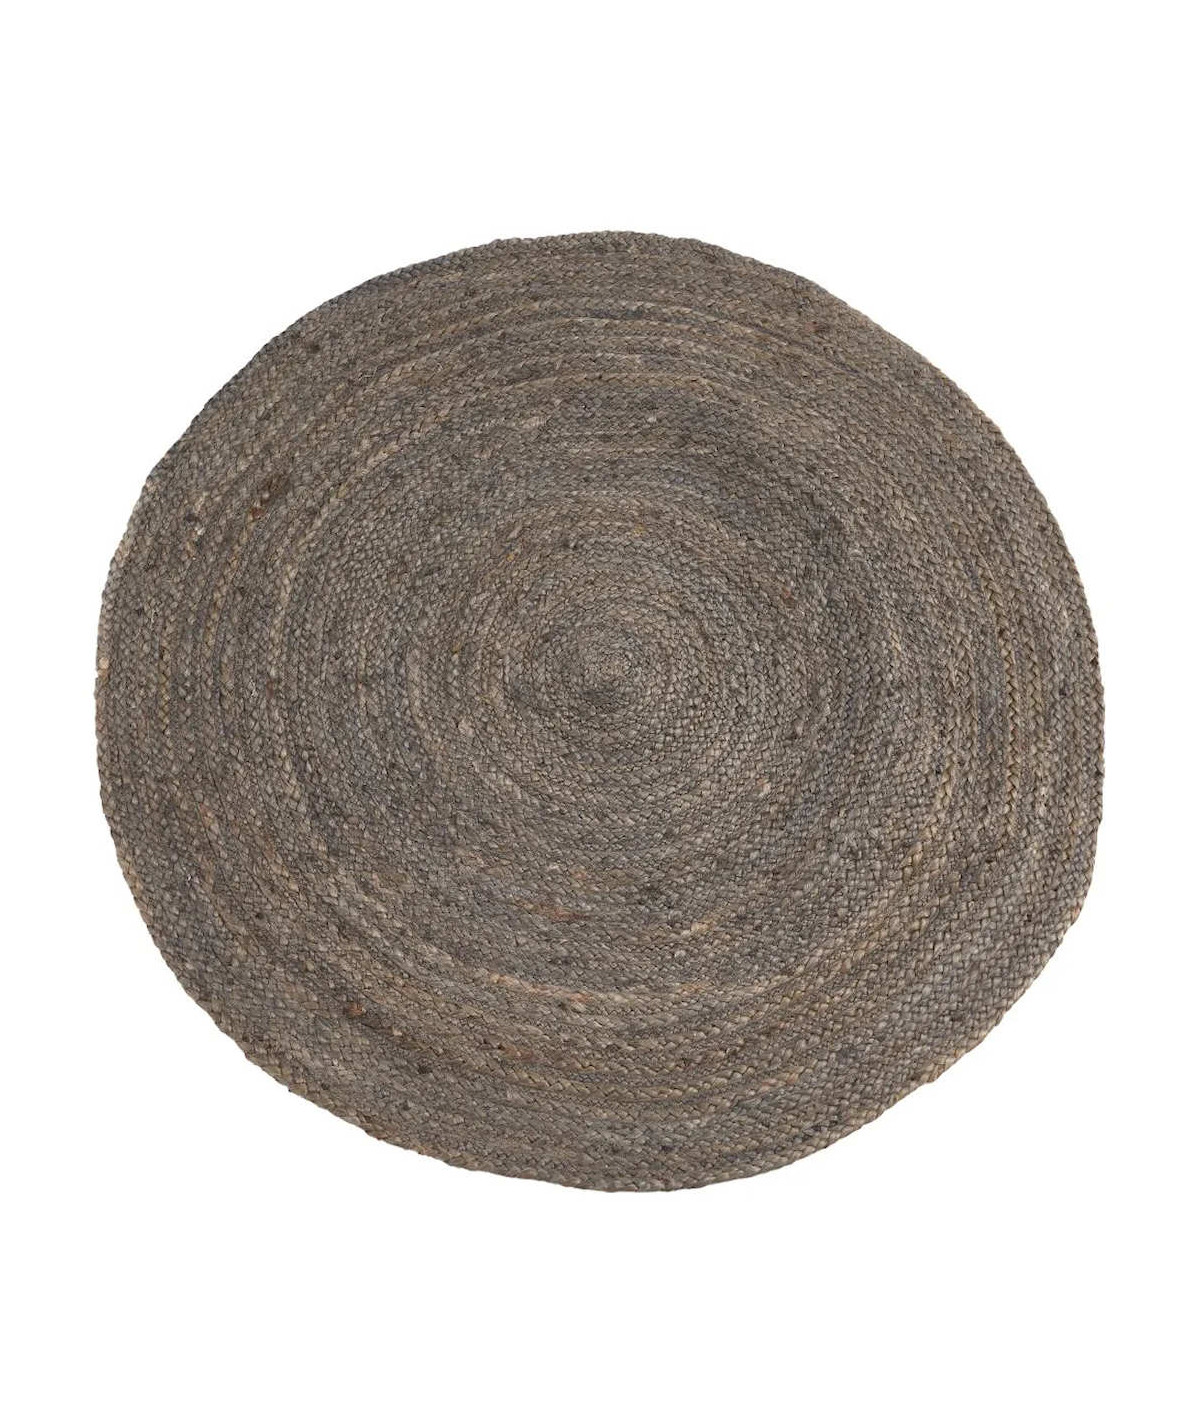 Tapis en jute rond naturel gris Diam120cm - Collection Ottawa